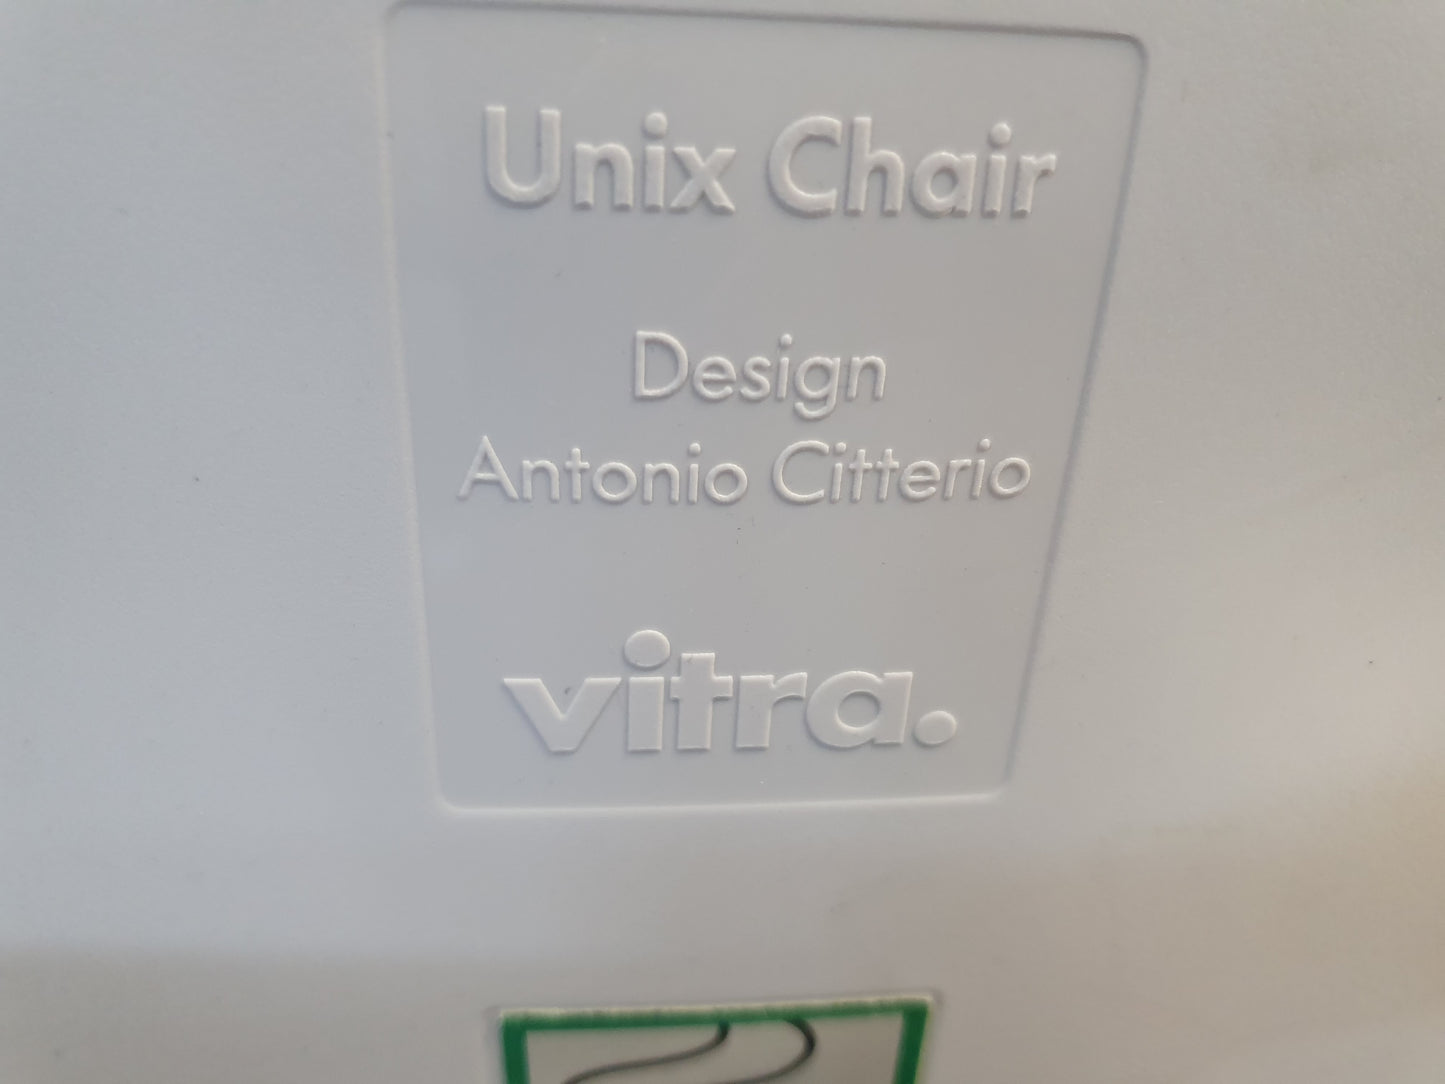 Unix chair Antonio Citterio vitra in grey and white